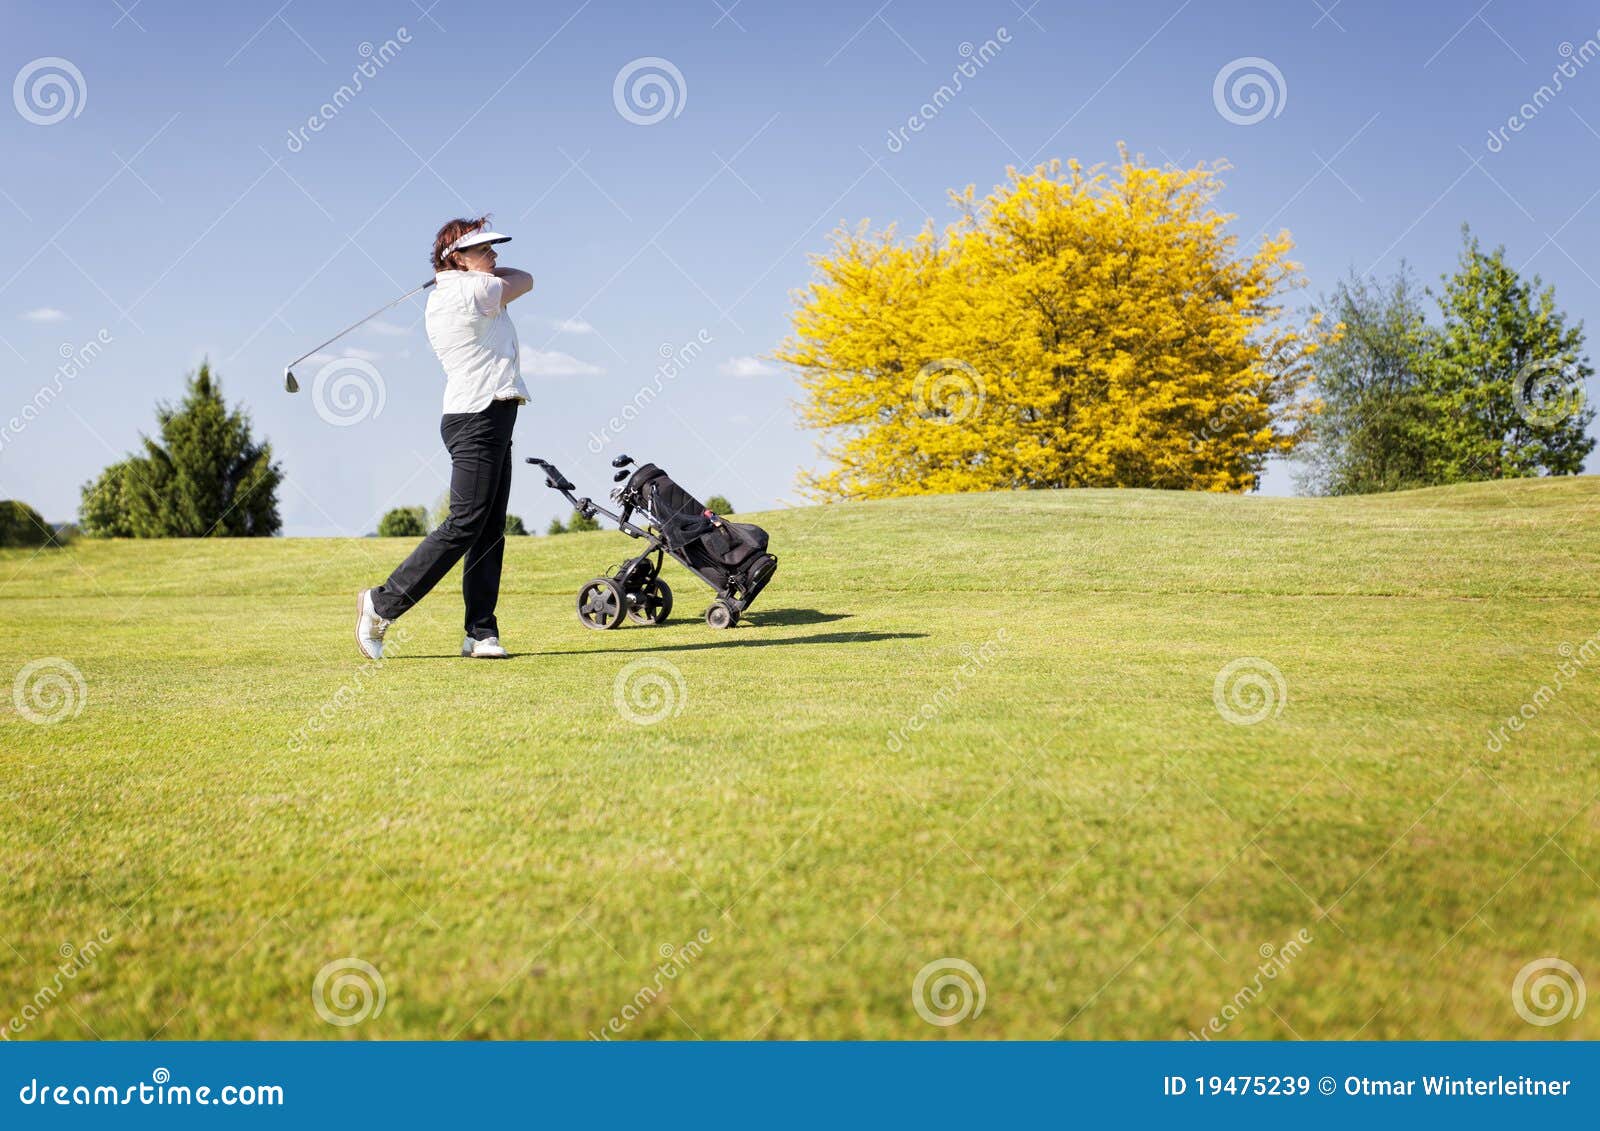 free clipart golf fairway - photo #34